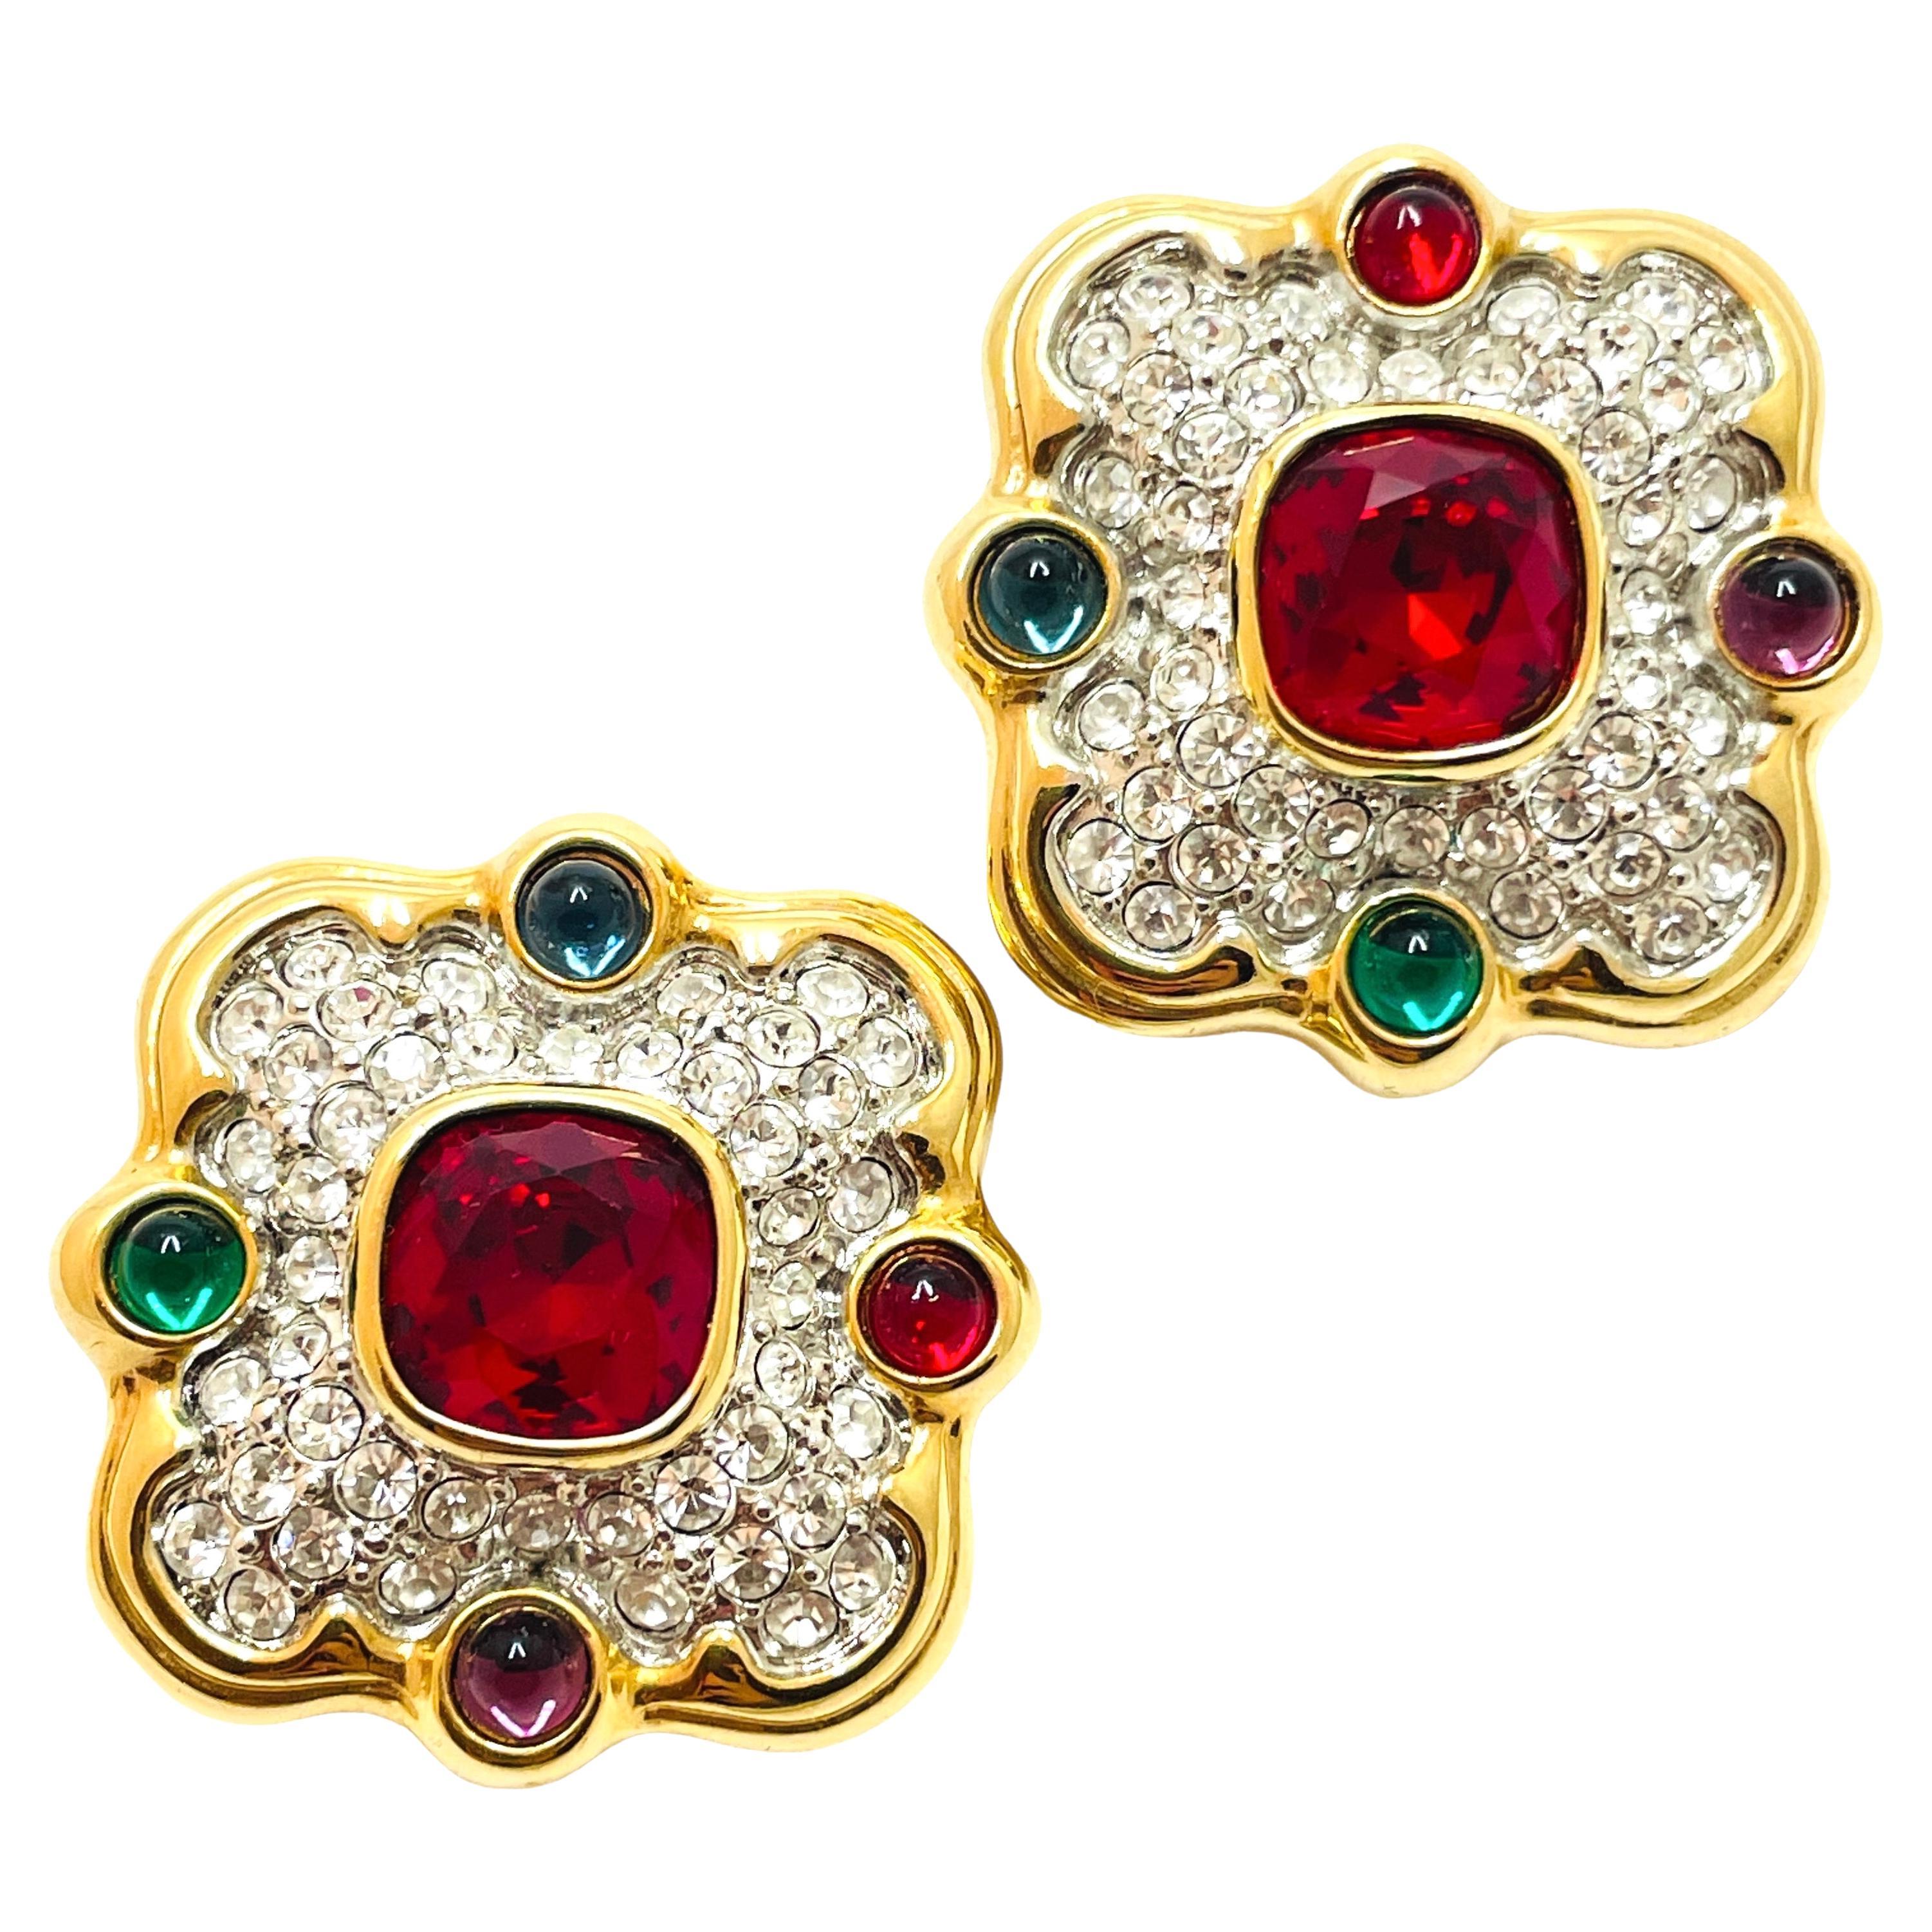 Share more than 135 swarovski earrings sale latest